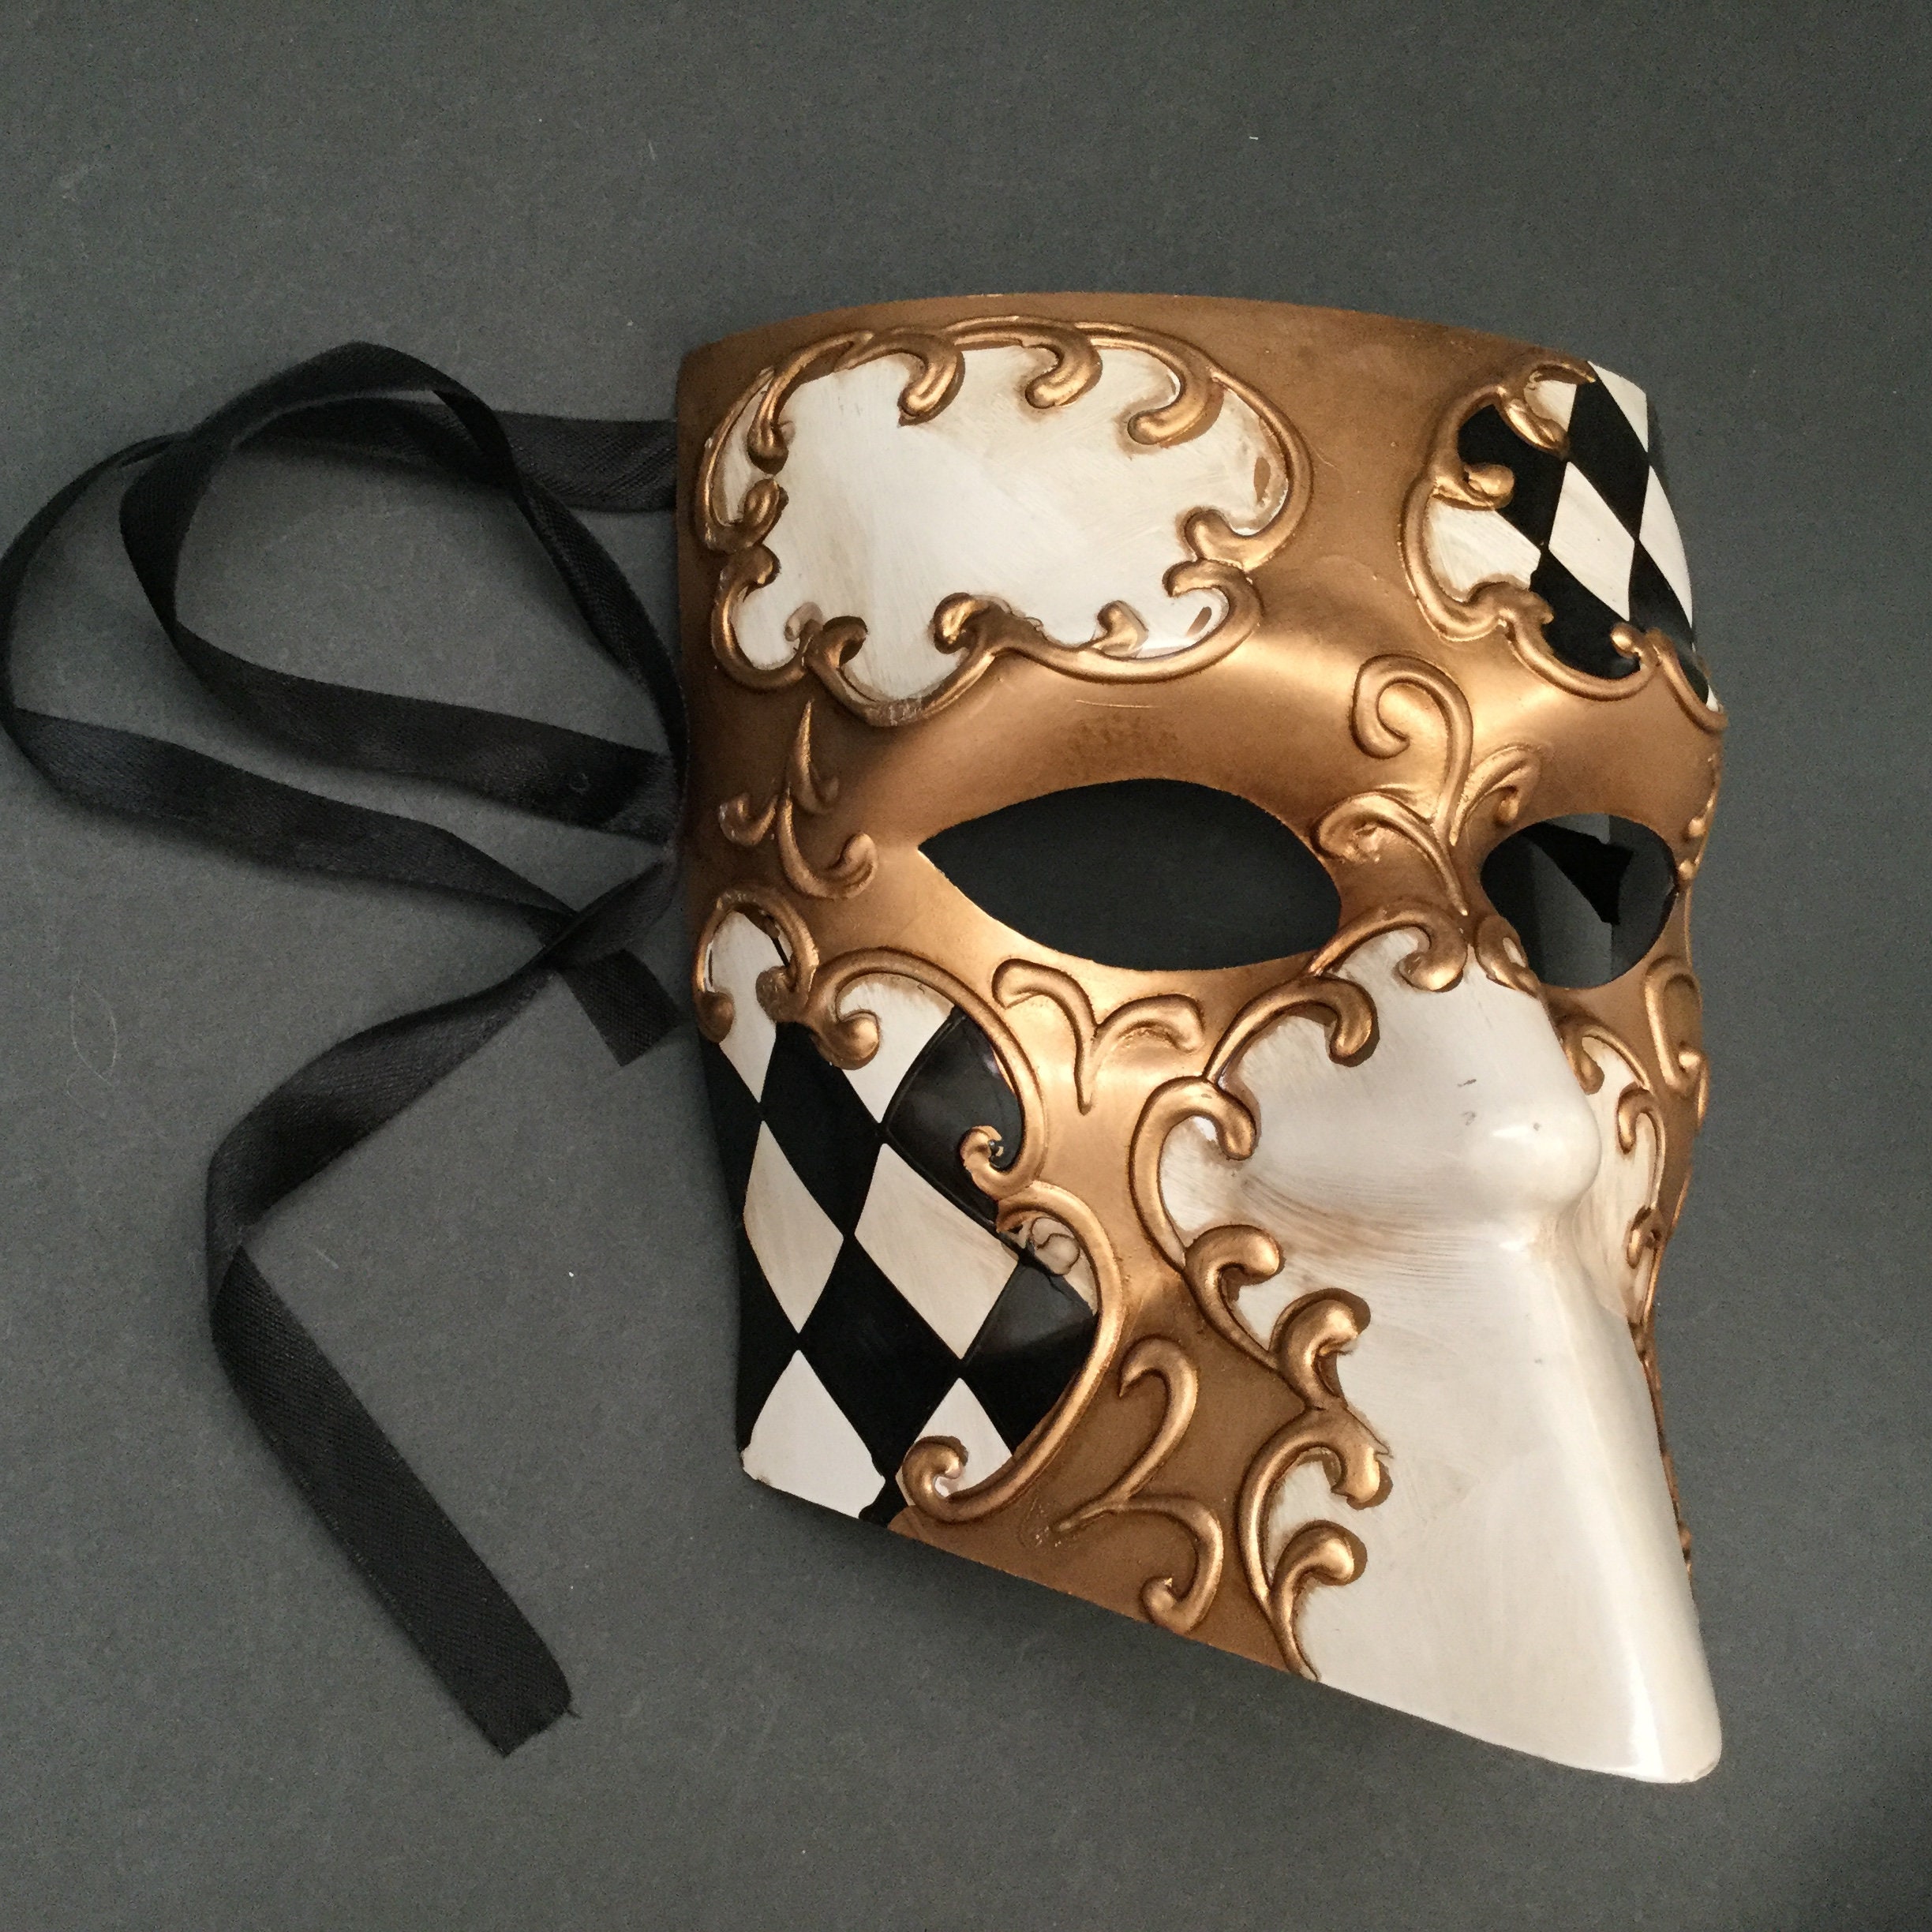 Small Mardi Gras Mask Glitter Stickers, set of 42 – Fairy Dust Decals